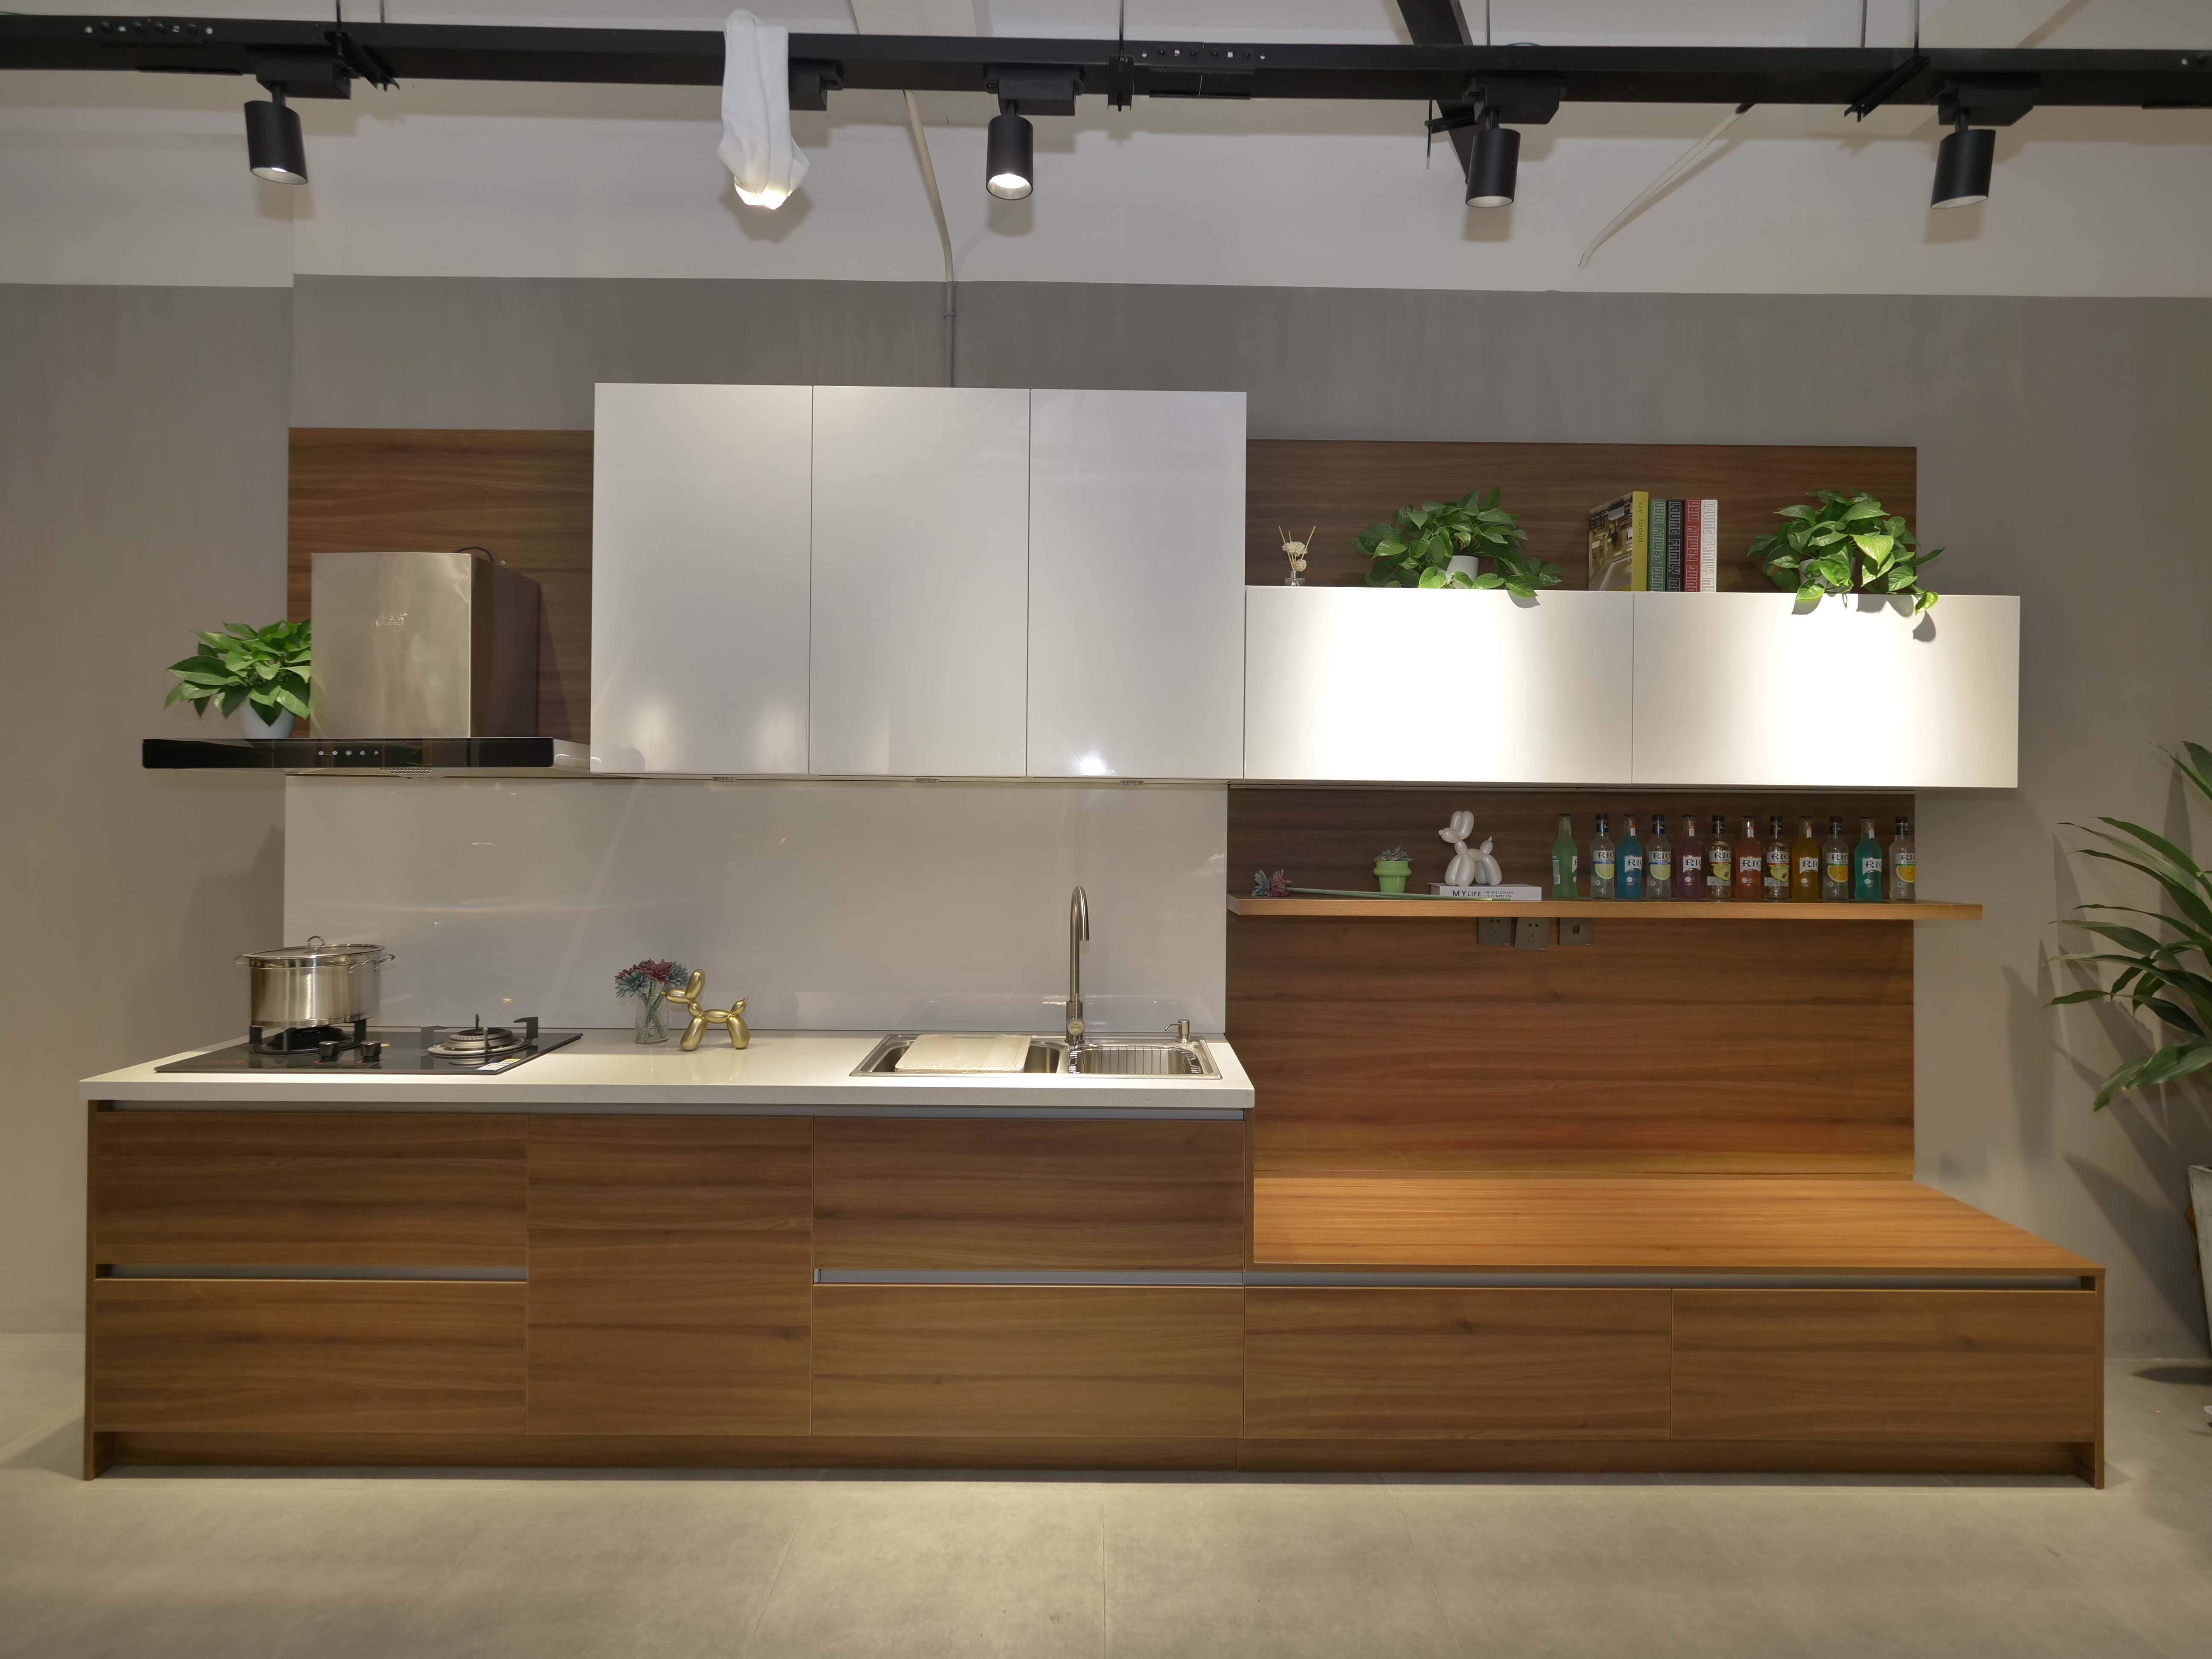 AisDecor reliable laminate kitchen cabinet overseas trader